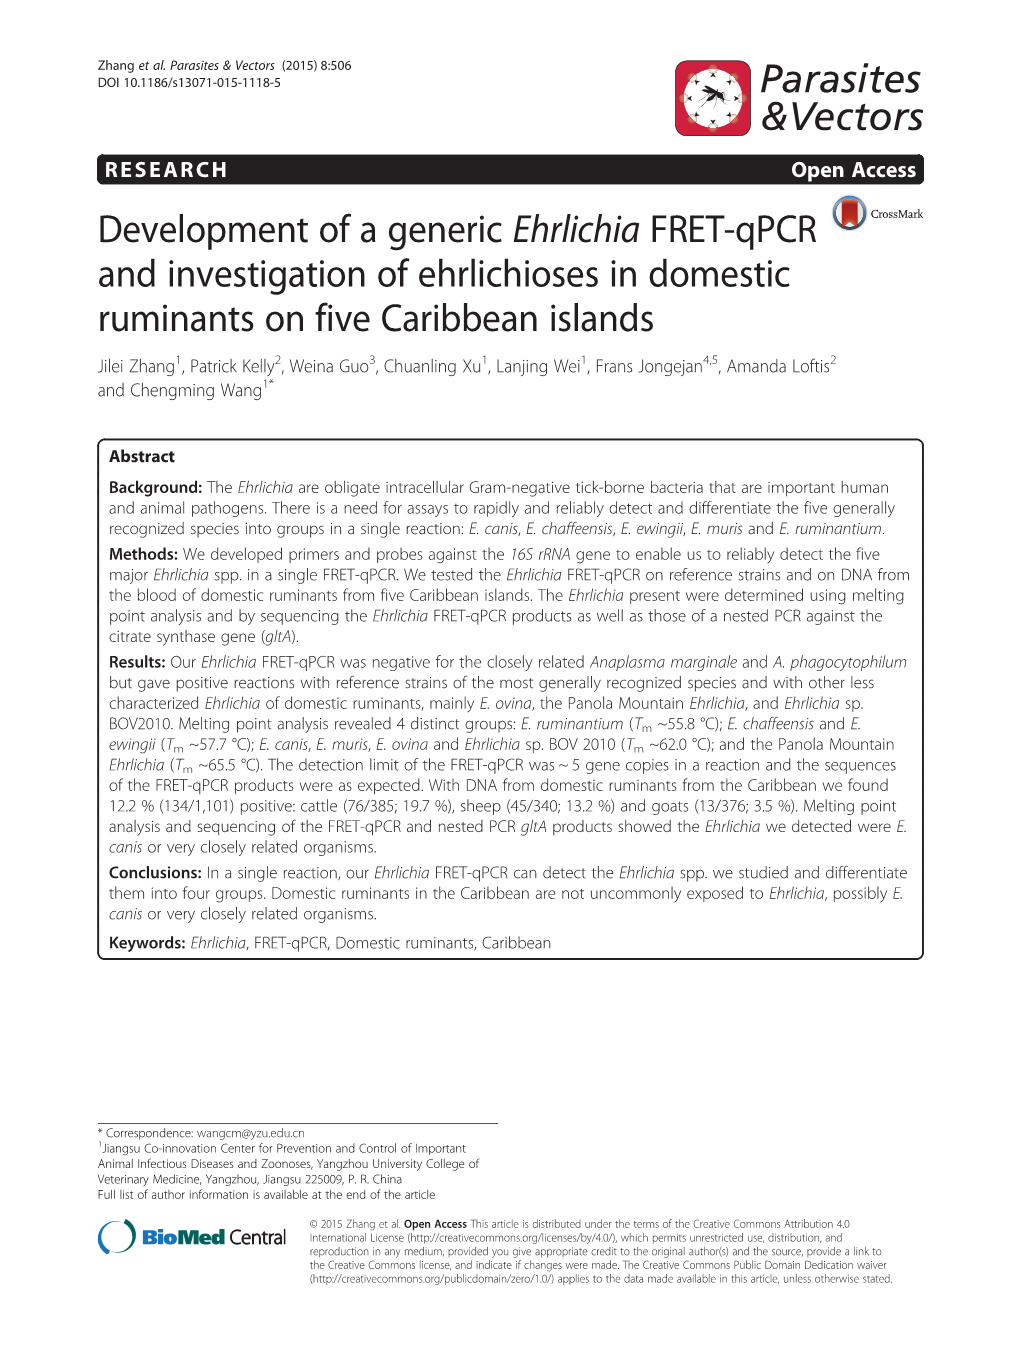 Development of a Generic Ehrlichia FRET-Qpcr and Investigation Of